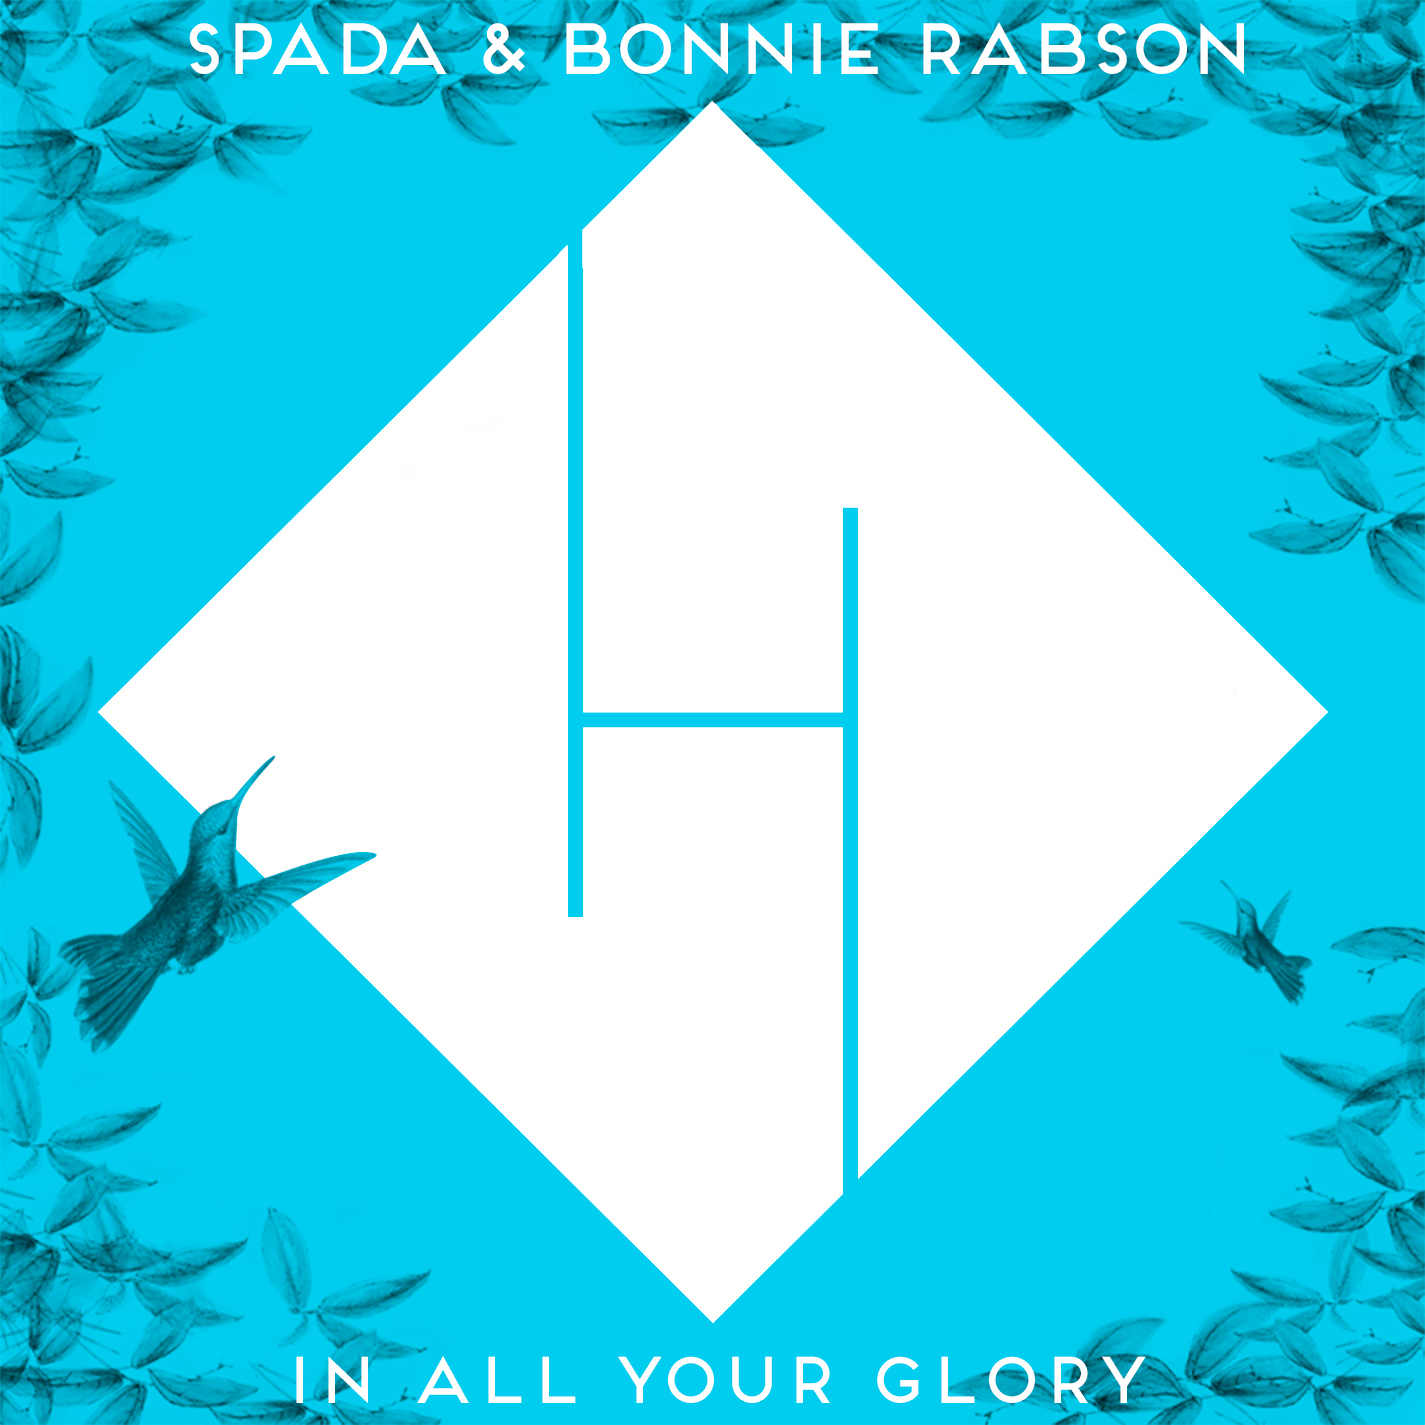 Khoasolla In All Your Glory - Spada & Bonnie Rabson (Remix Boris Brejcha) PREVIEW